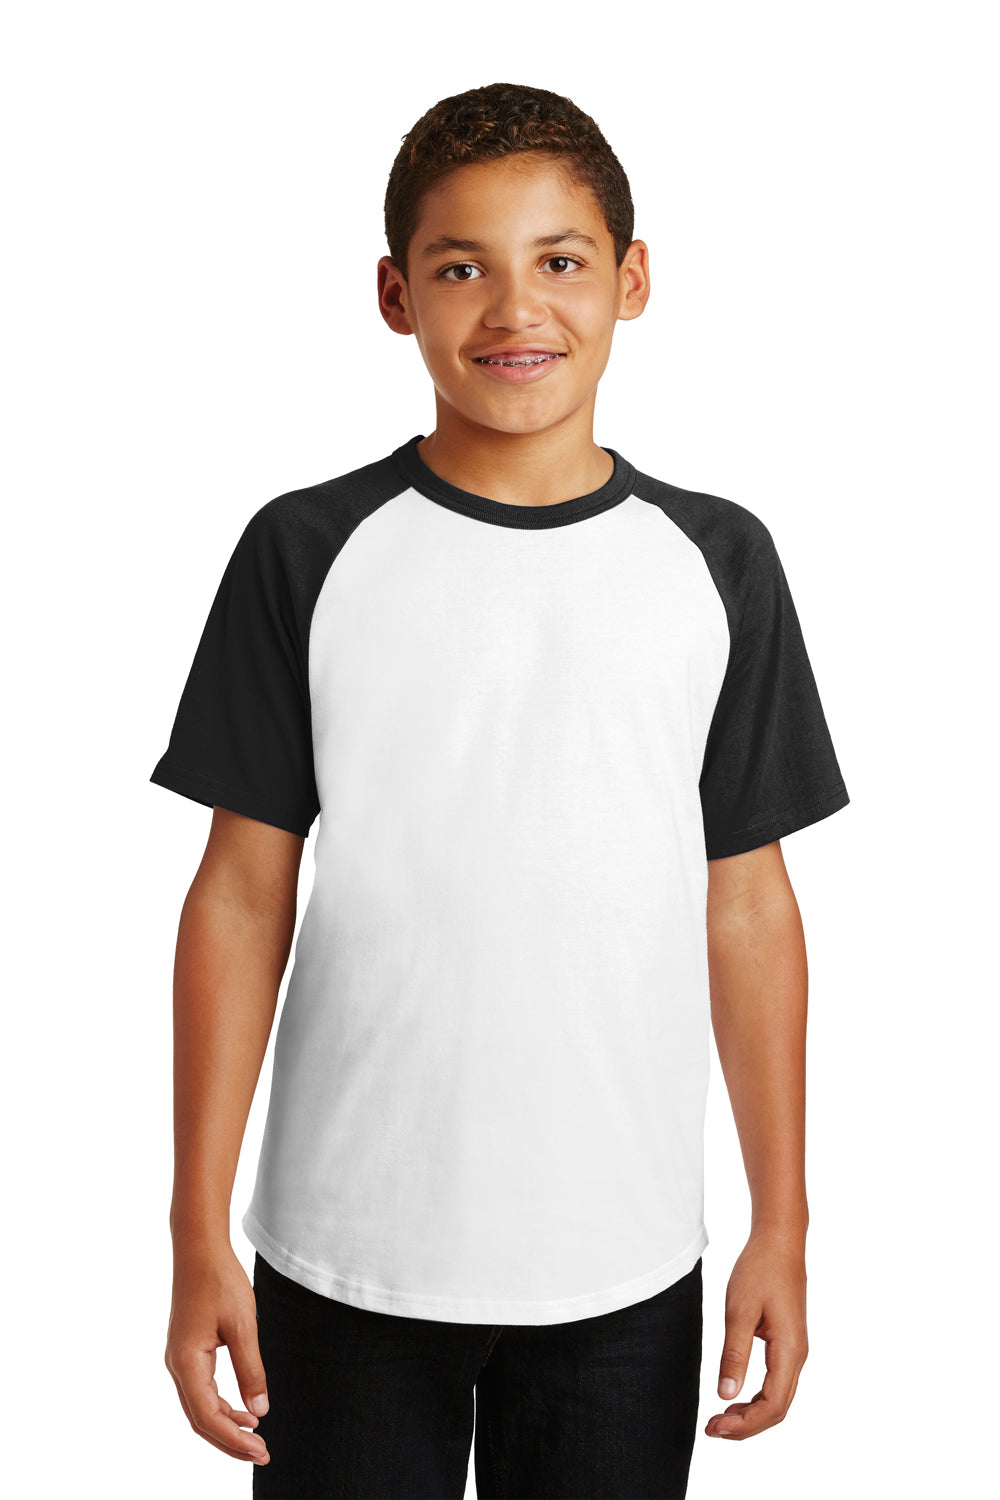 Sport-Tek YT201 Youth Short Sleeve Crewneck T-Shirt White/Black Front